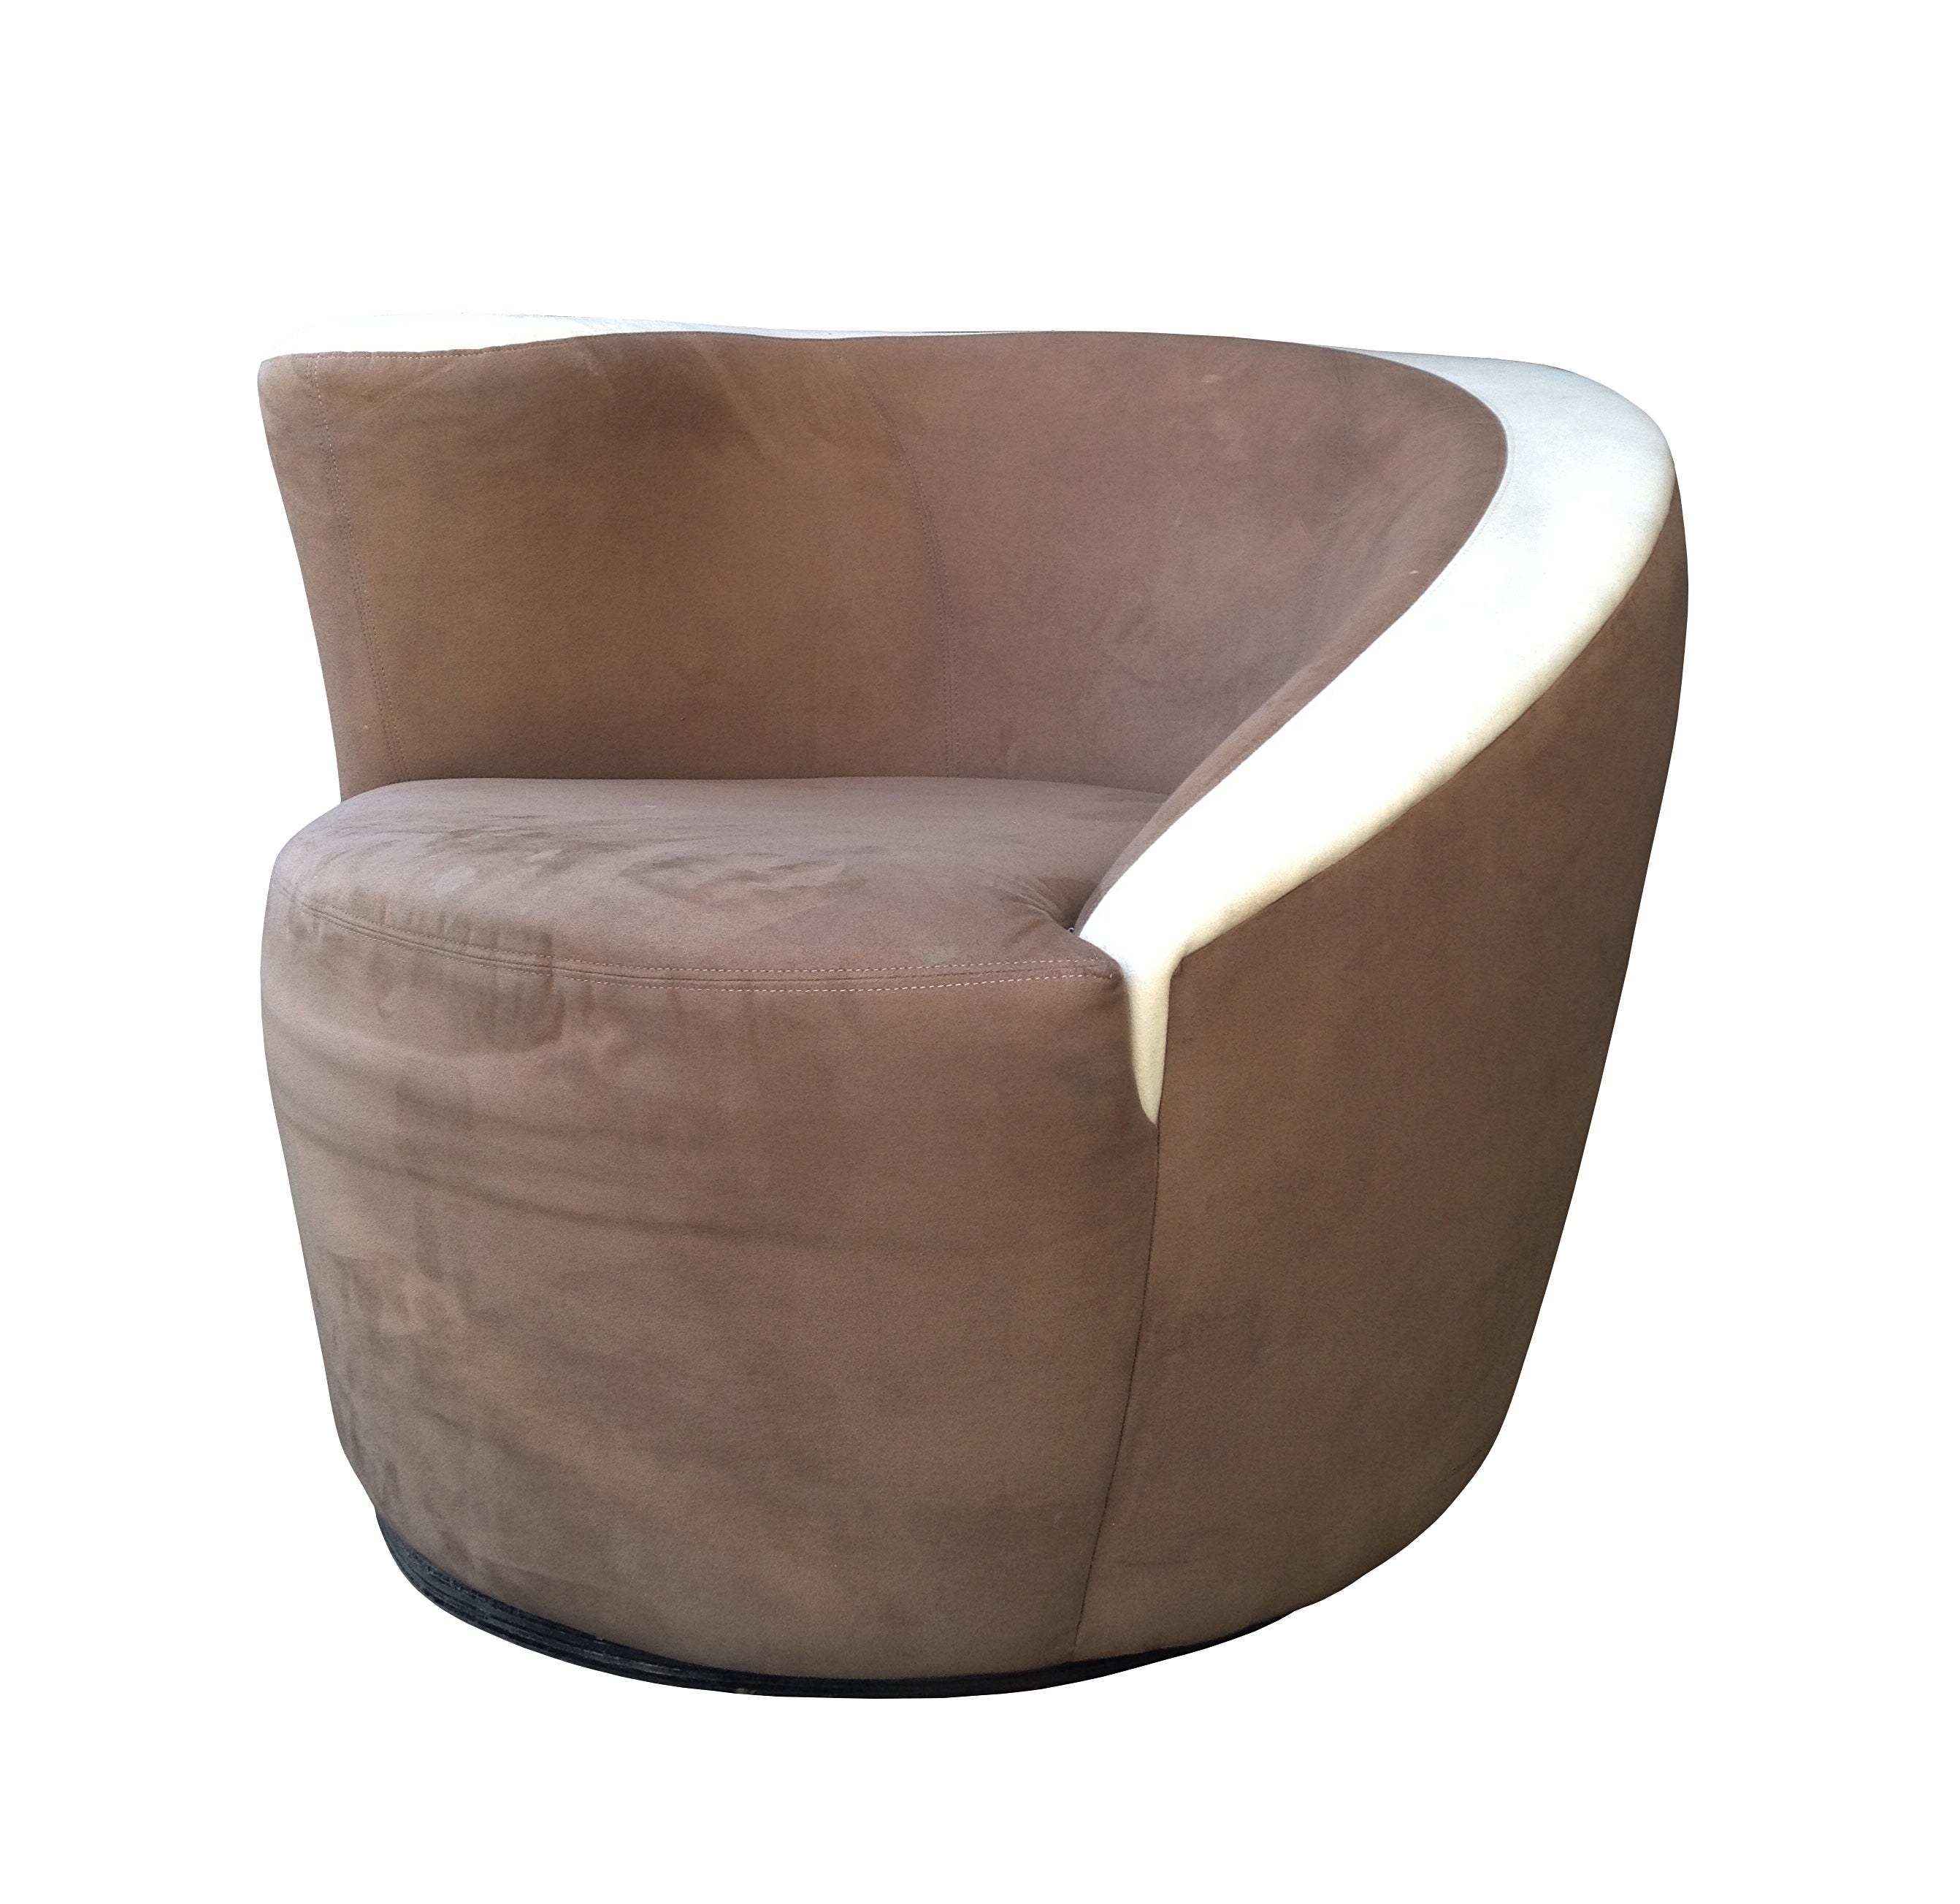 Vladimir Kagan Nautilus Chair in Chocolate Brown Microfiber